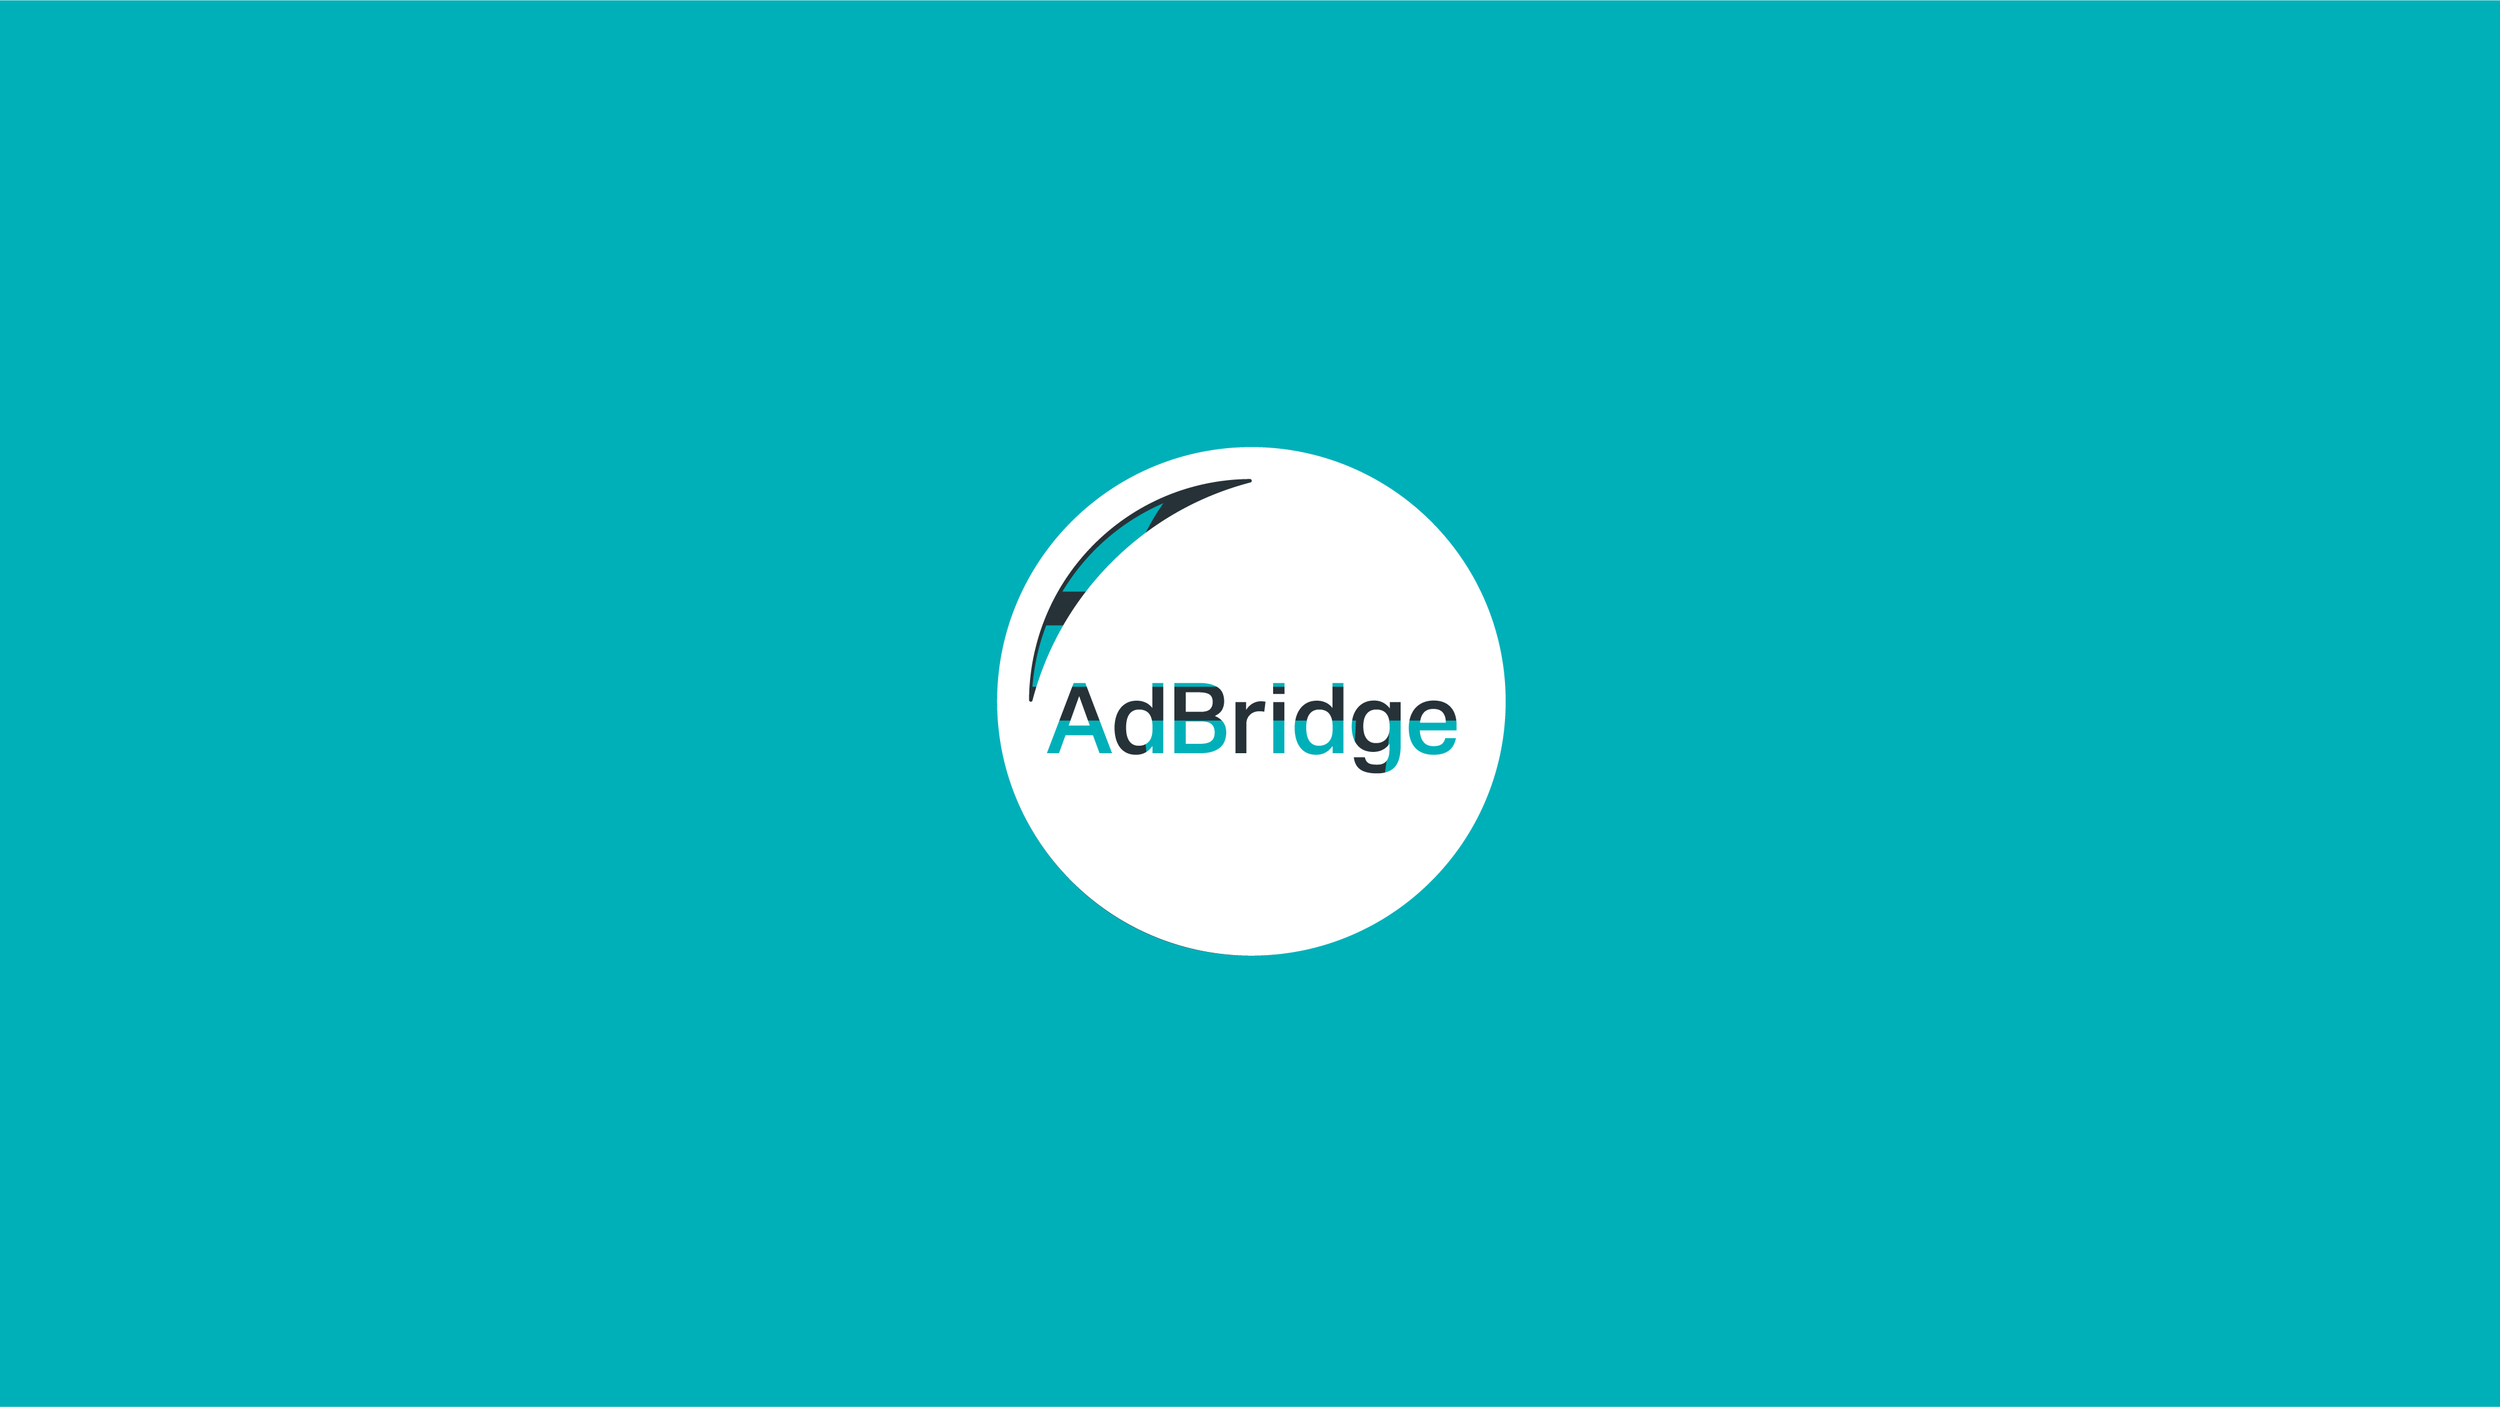 adbridge_art-boards_1-13.png